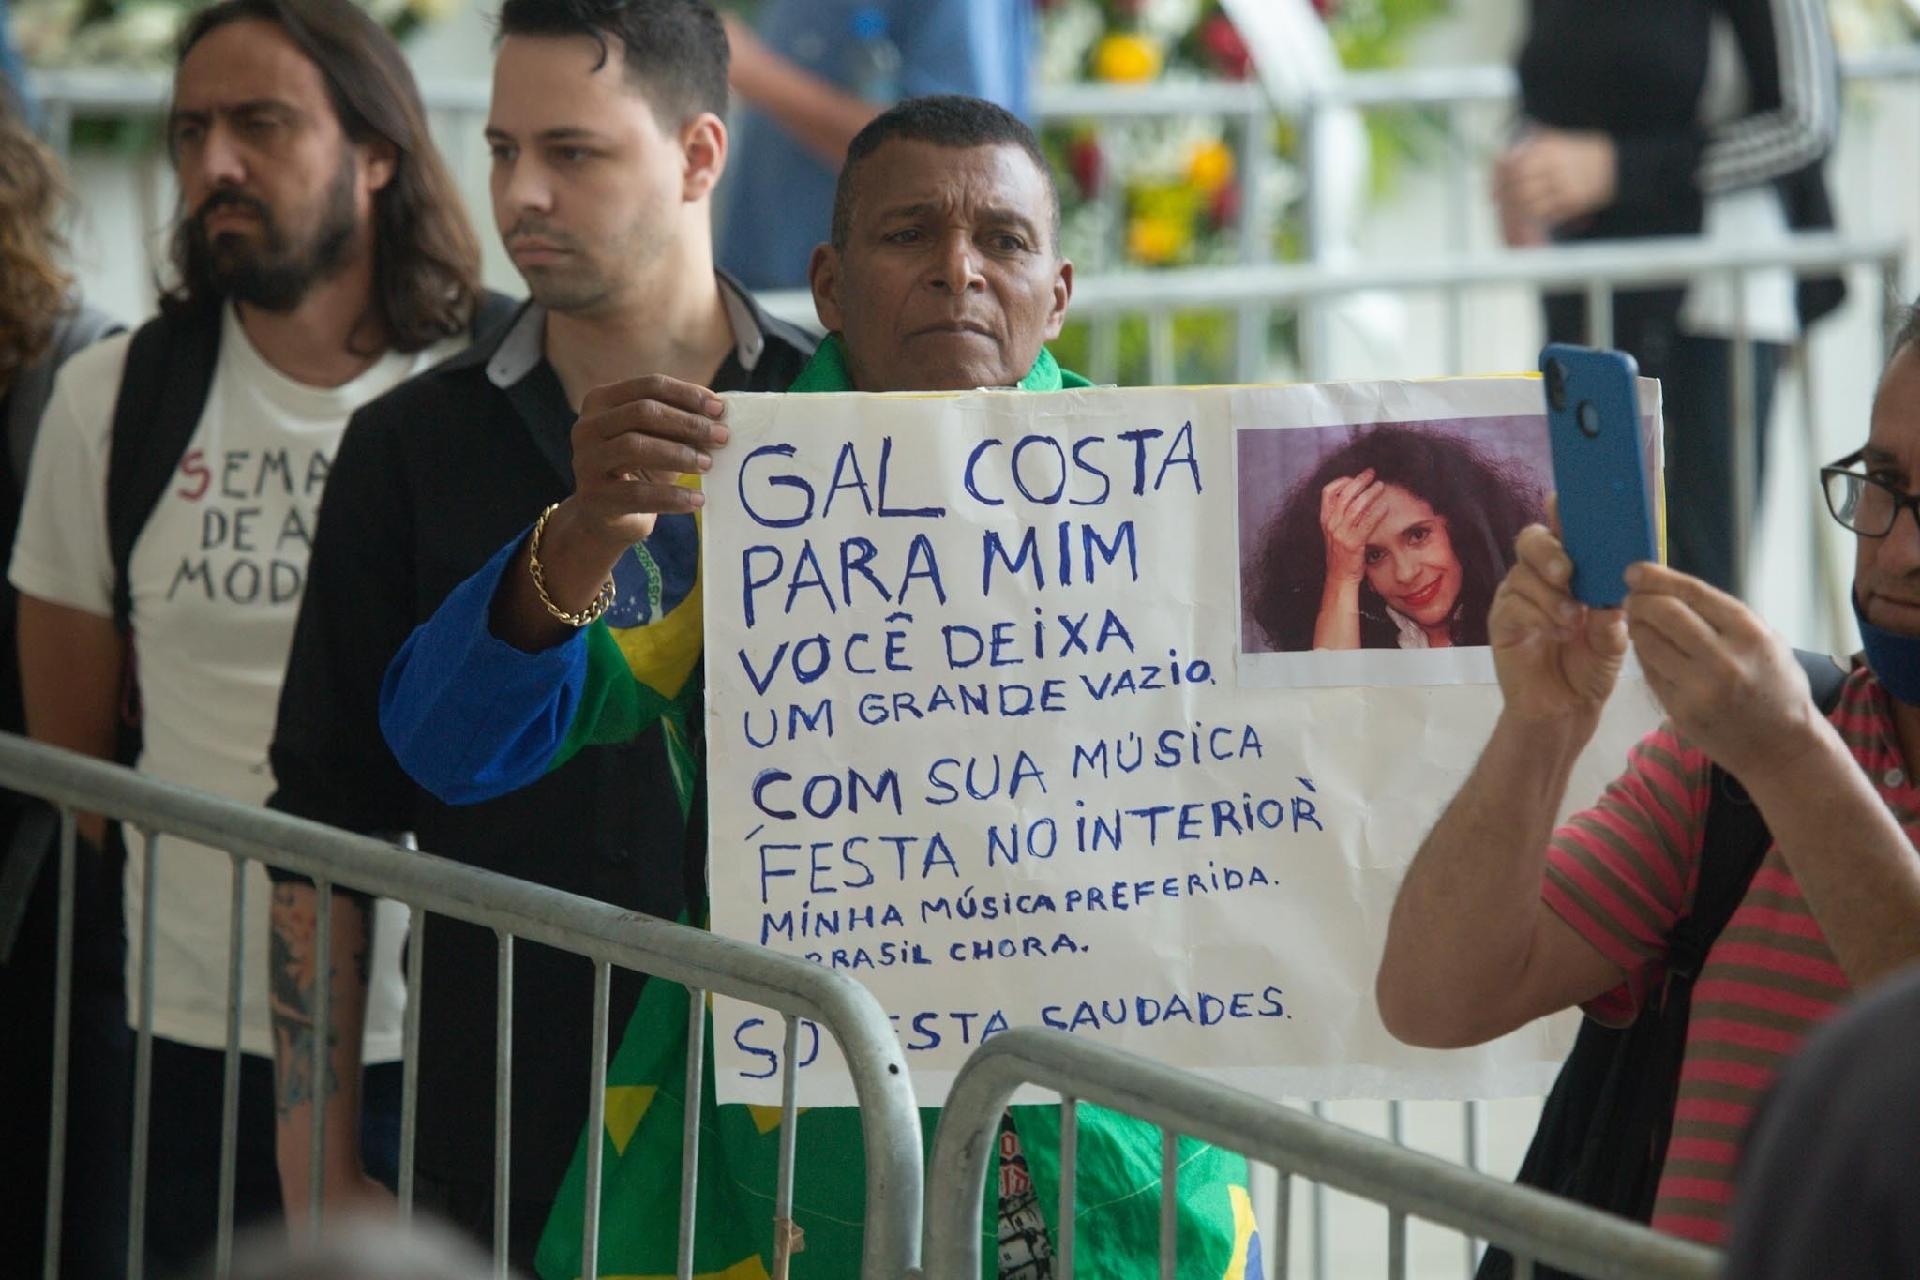 Gal Costa's body is veiled in Sao Paulo - Amauri Nin / Brazil News